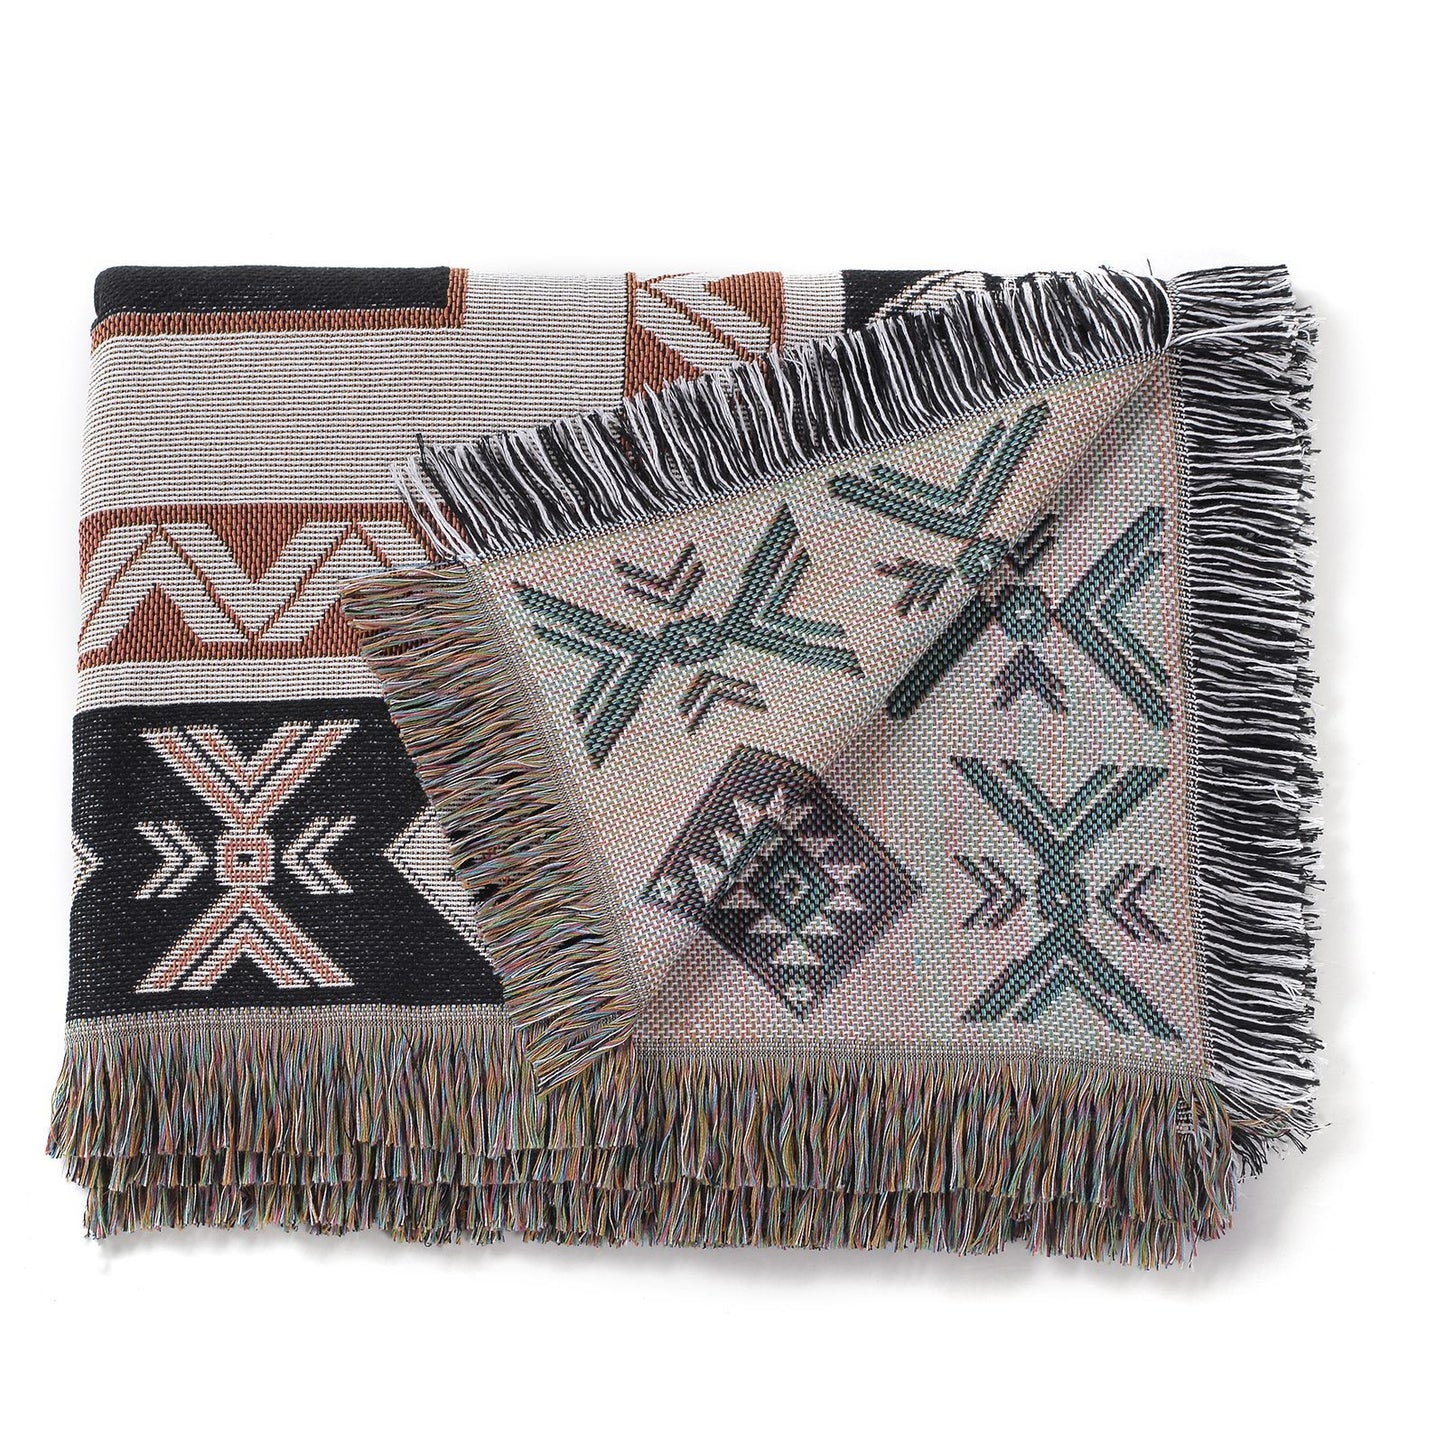 Boho Wovne Throw Blanket Picnic Blanket Sofa Covers 130 x 160 CM